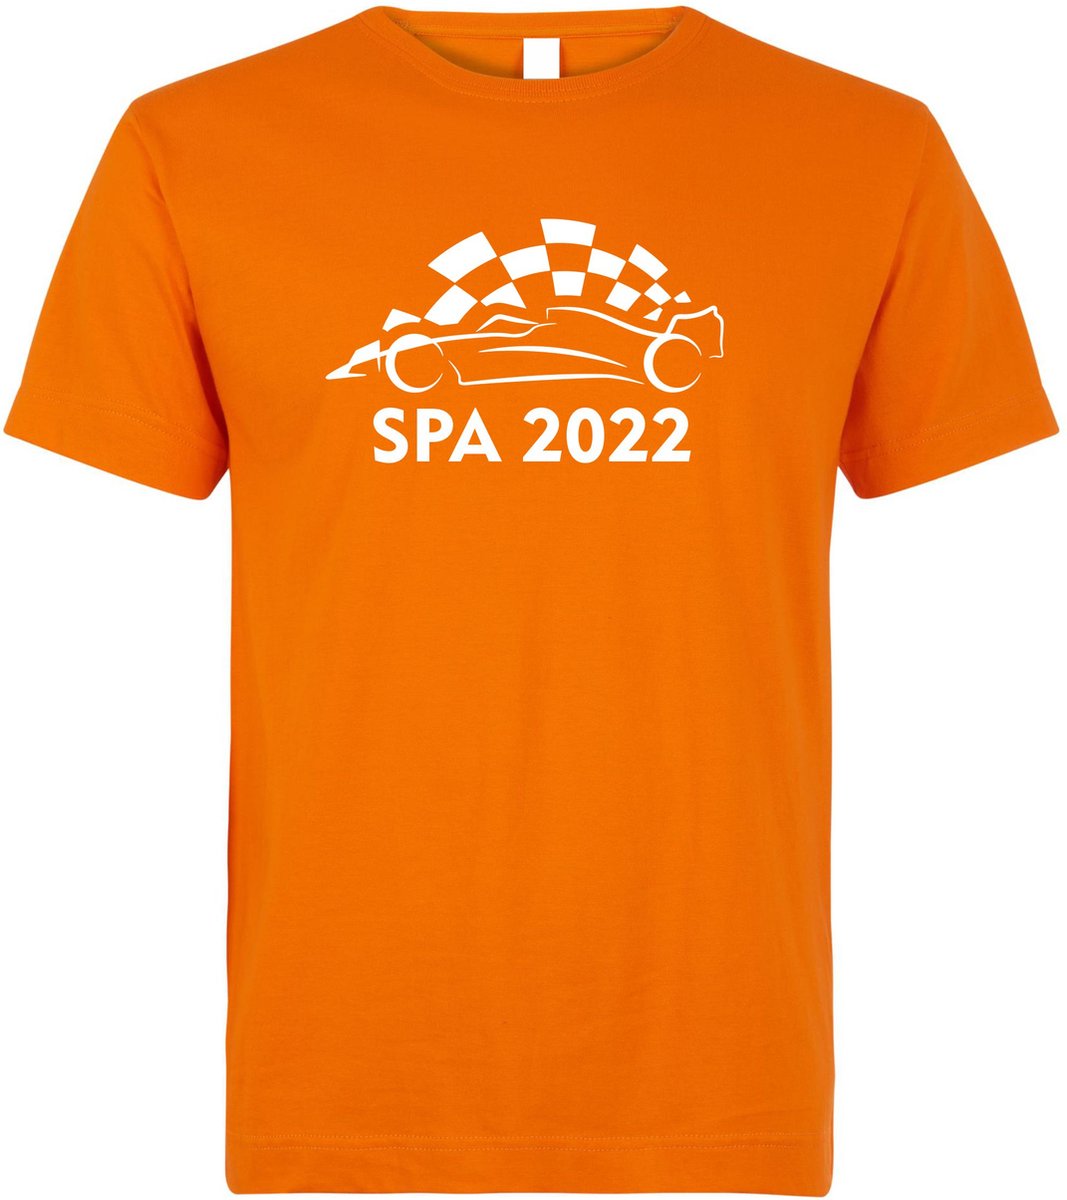 T-shirt Spa 2022 met raceauto | Max Verstappen / Red Bull Racing / Formule 1 fan | Grand Prix Circuit Spa-Francorchamps | kleding shirt | Oranje | maat M